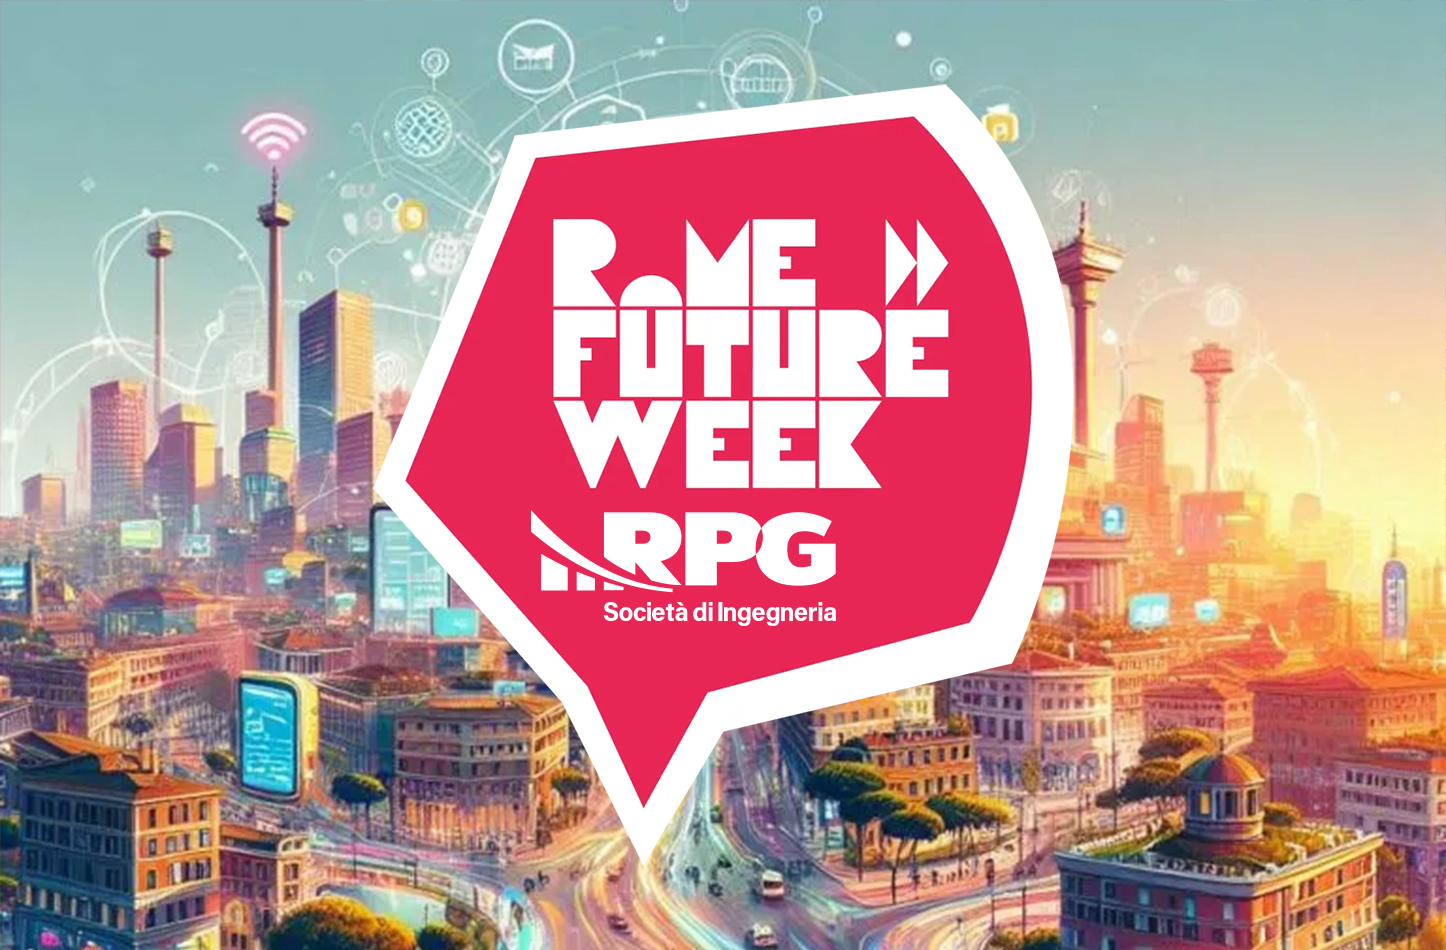 Rome Future Week RPG Ingegneria